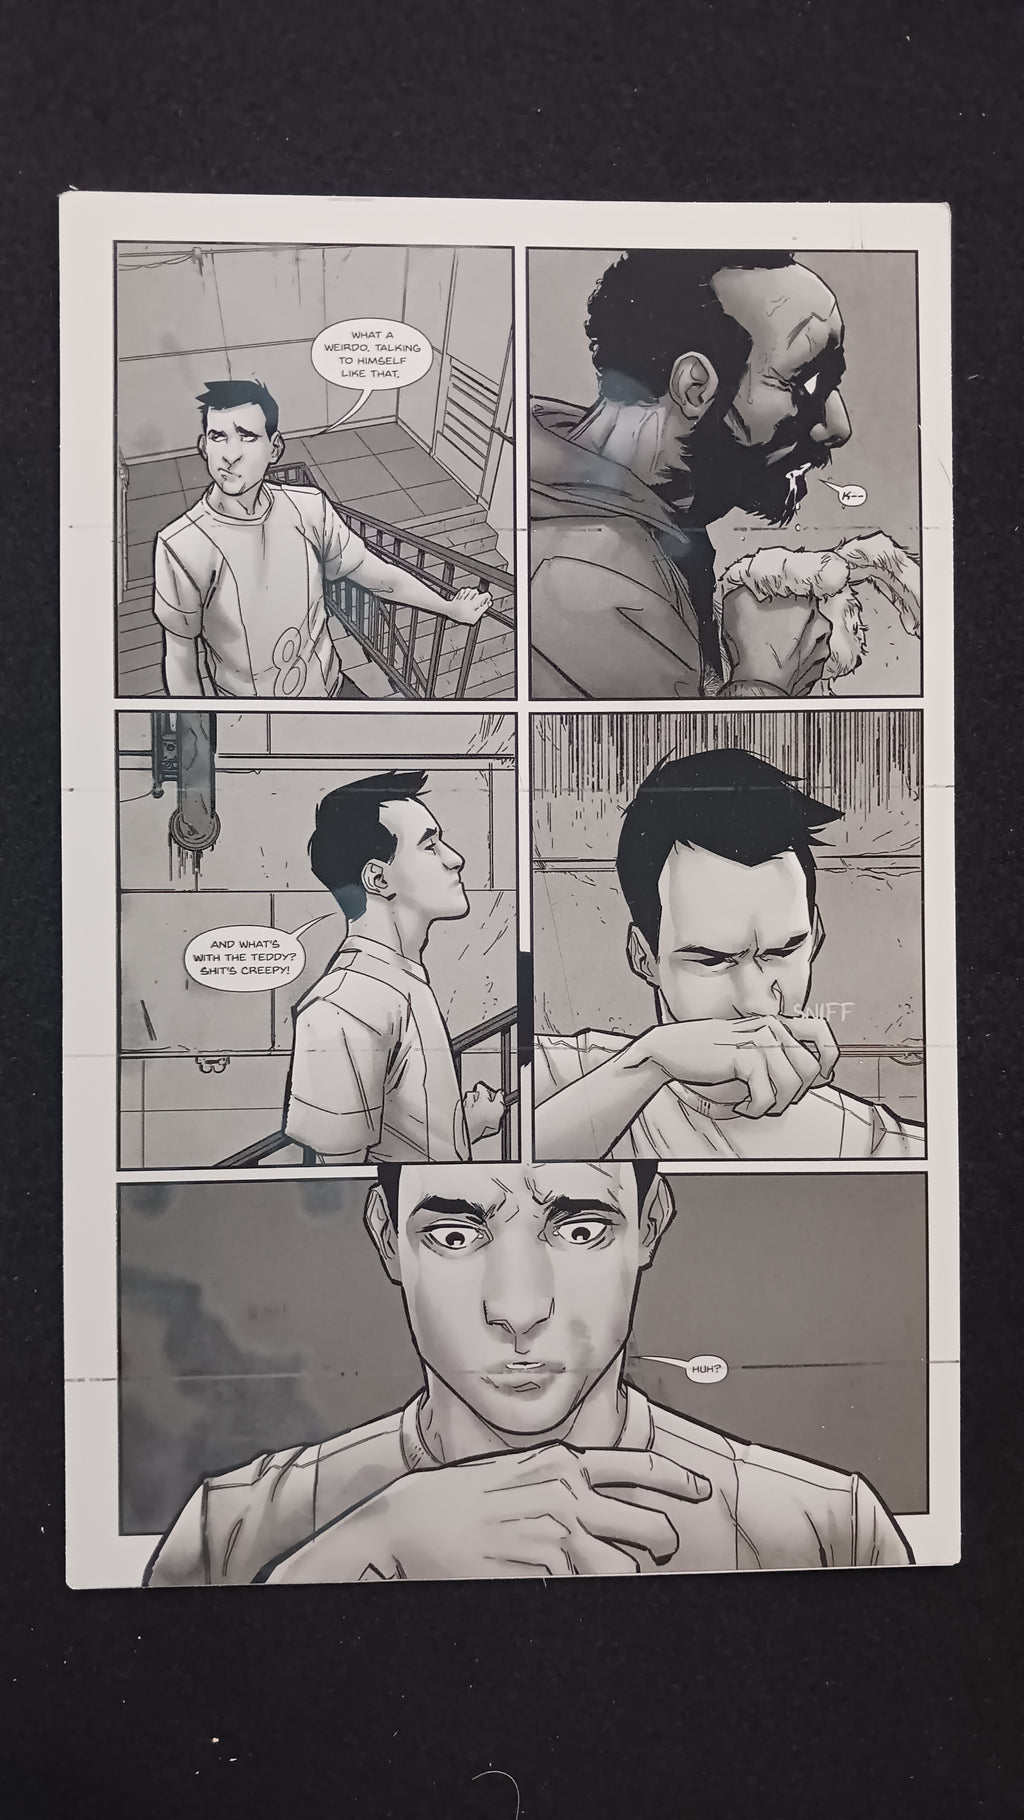 Category Zero Conflict #4 - Page 19 - PRESSWORKS - Comic Art - Printer Plate - Black